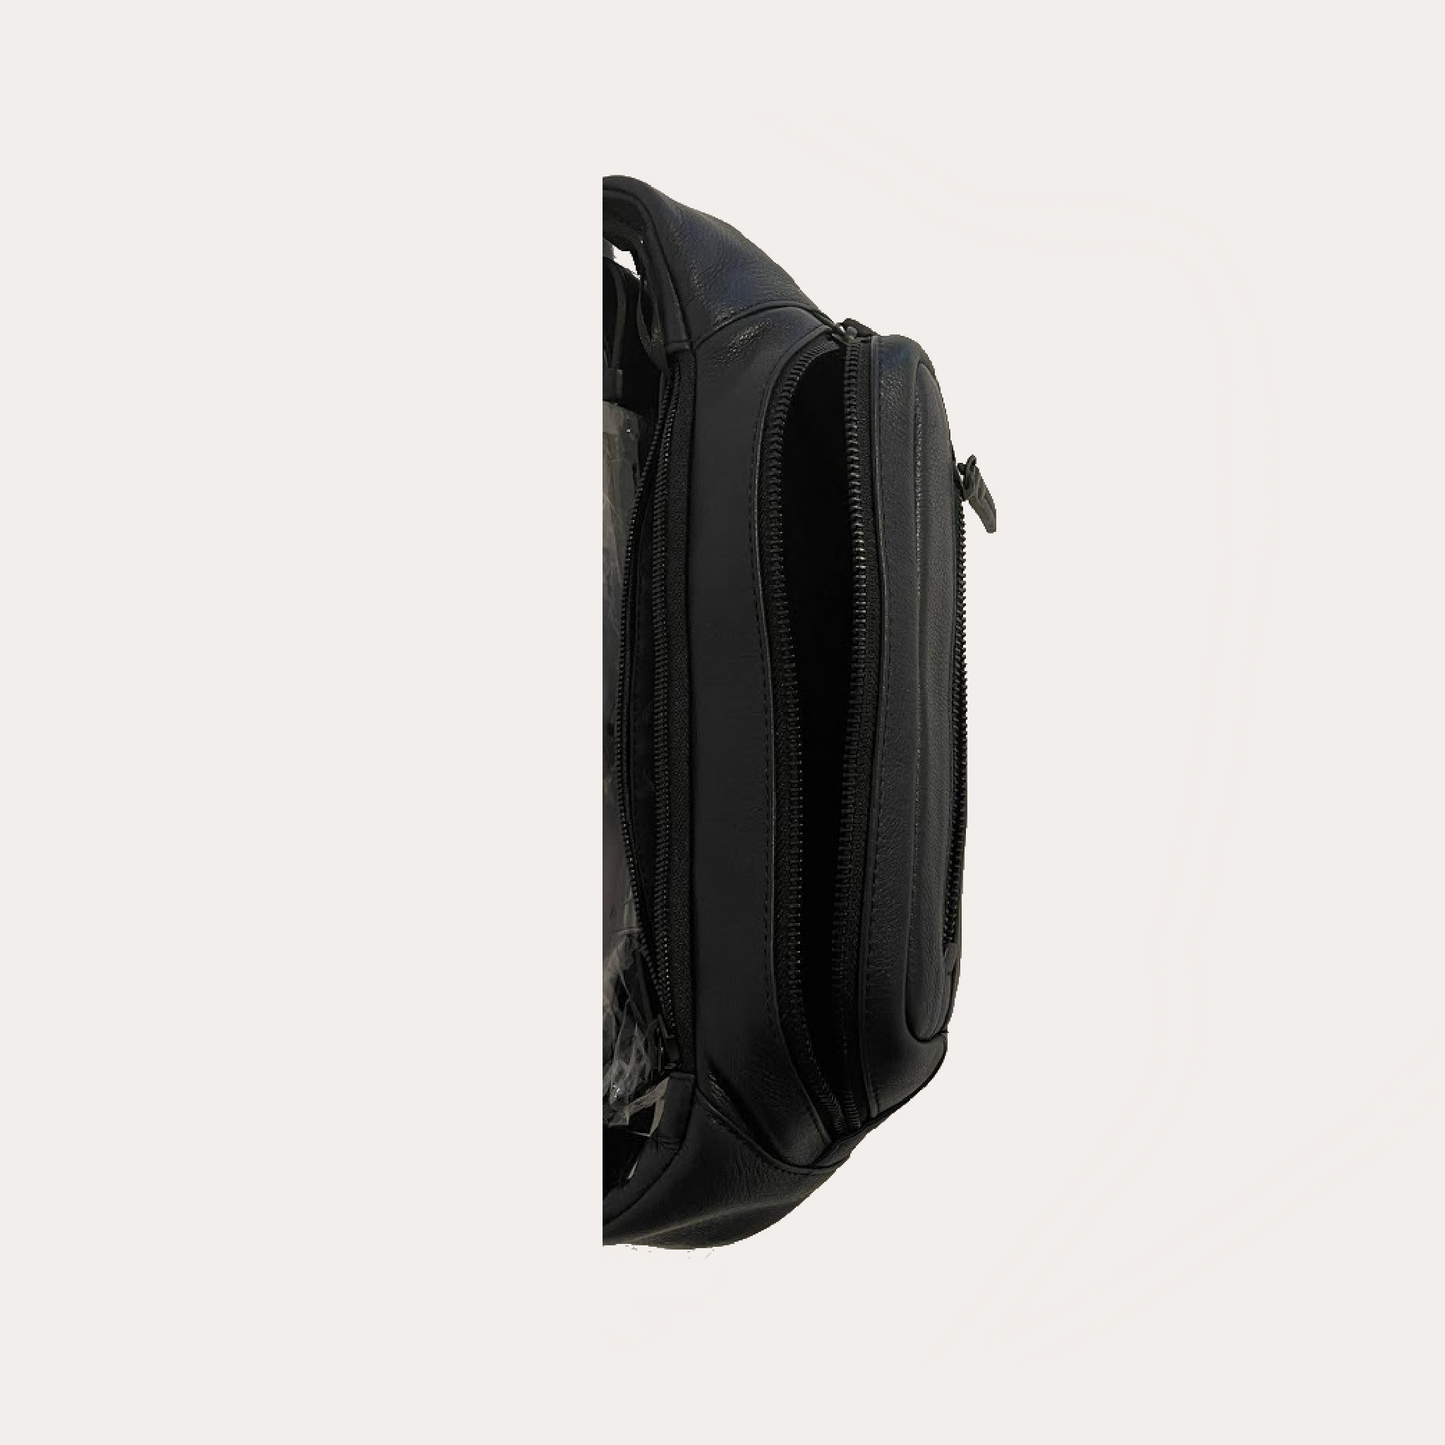 Gianni Conti Navy Leather Bum Bag